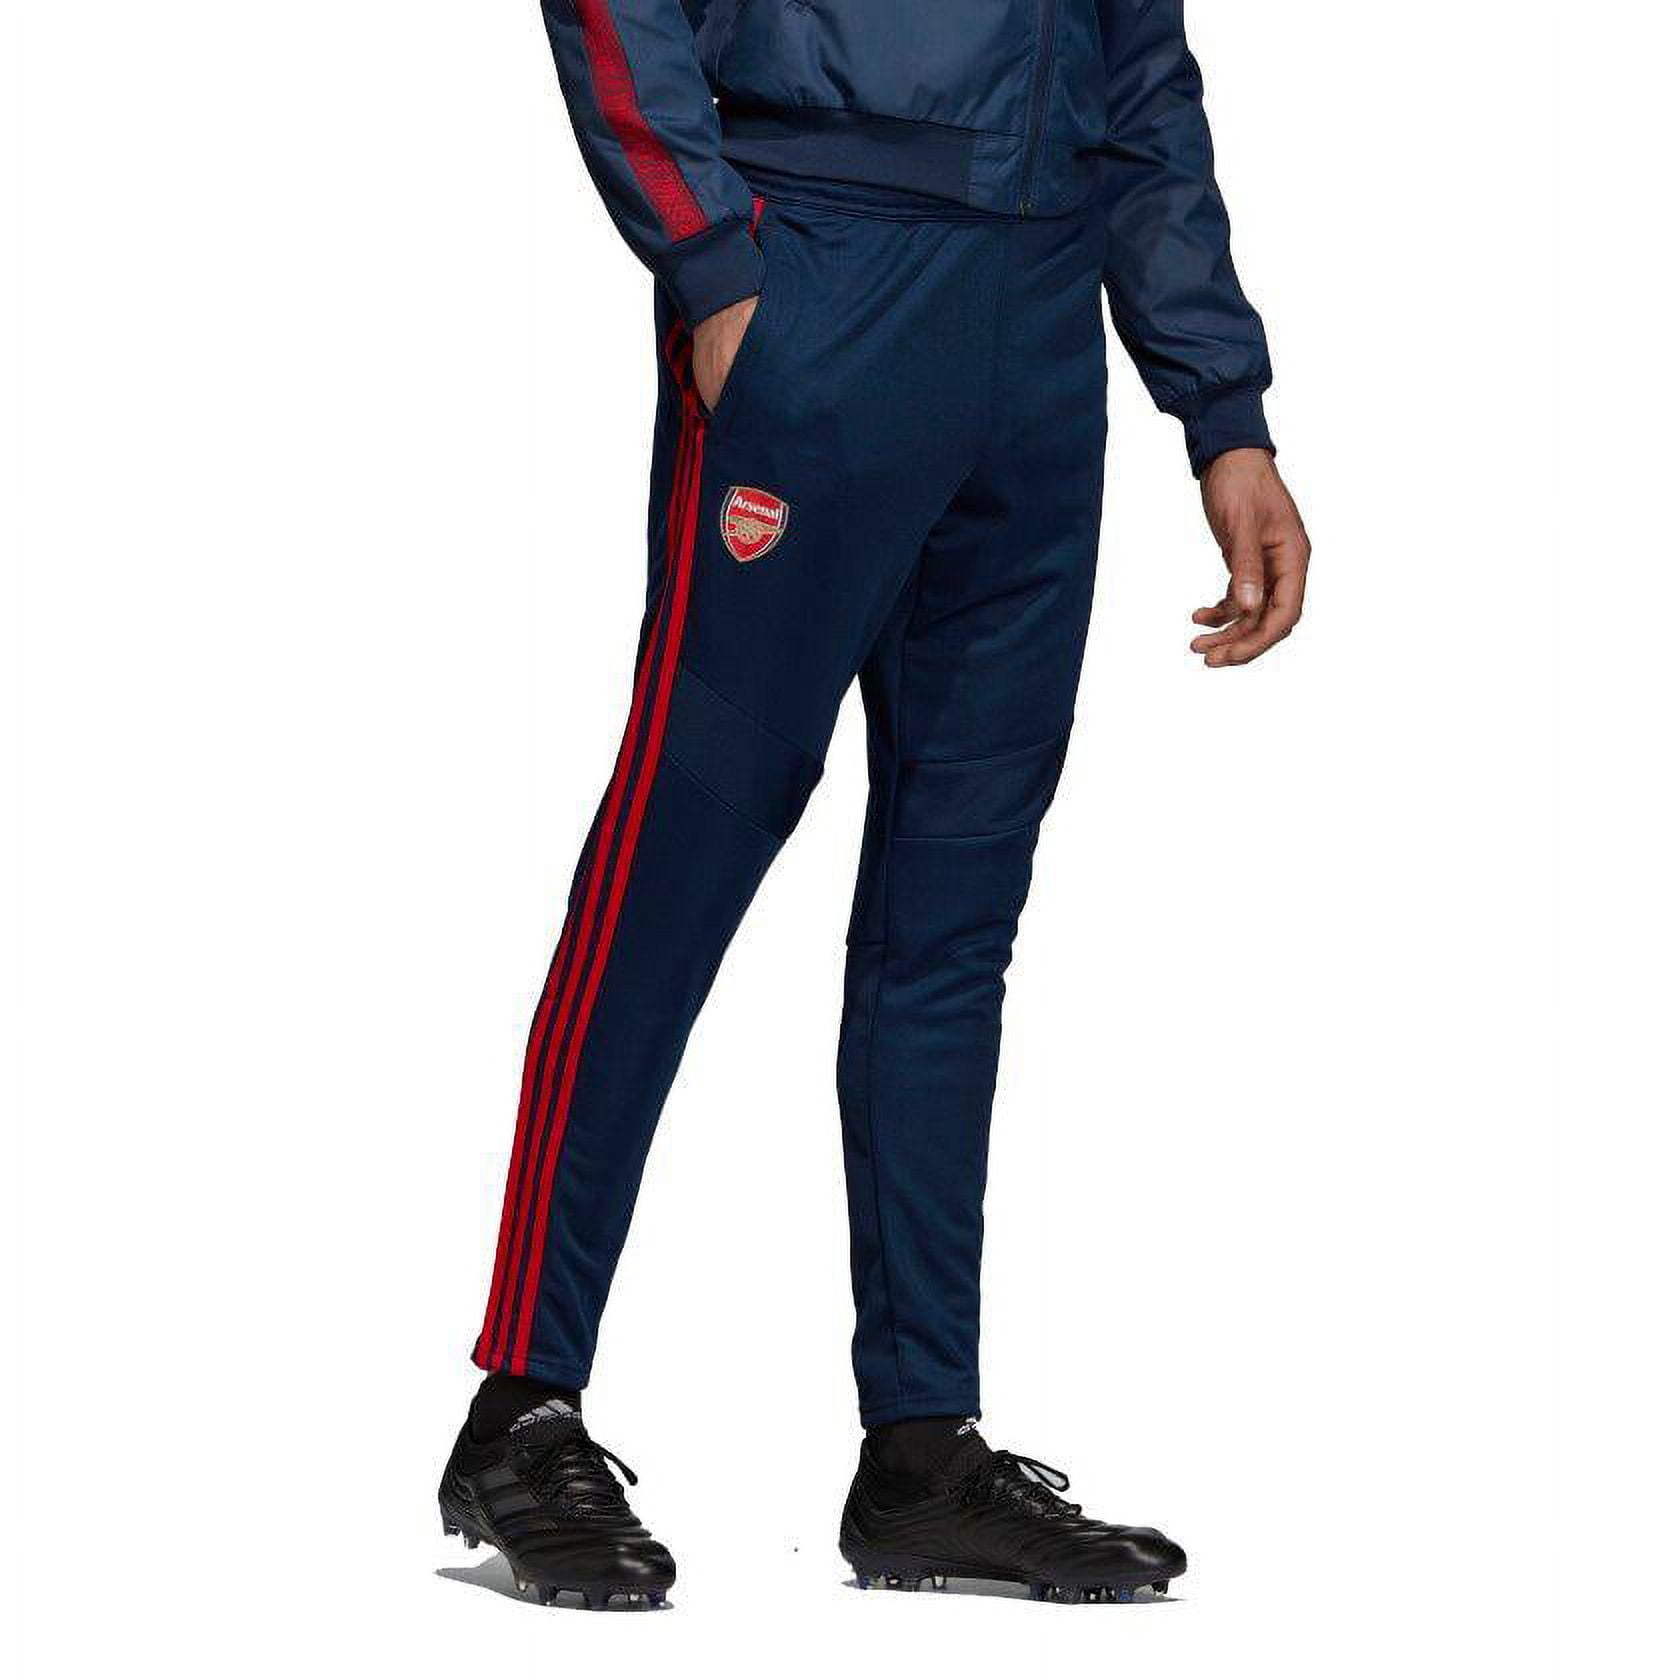 Arsenal FC Shorts, Sweatpants, Arsenal Leggings